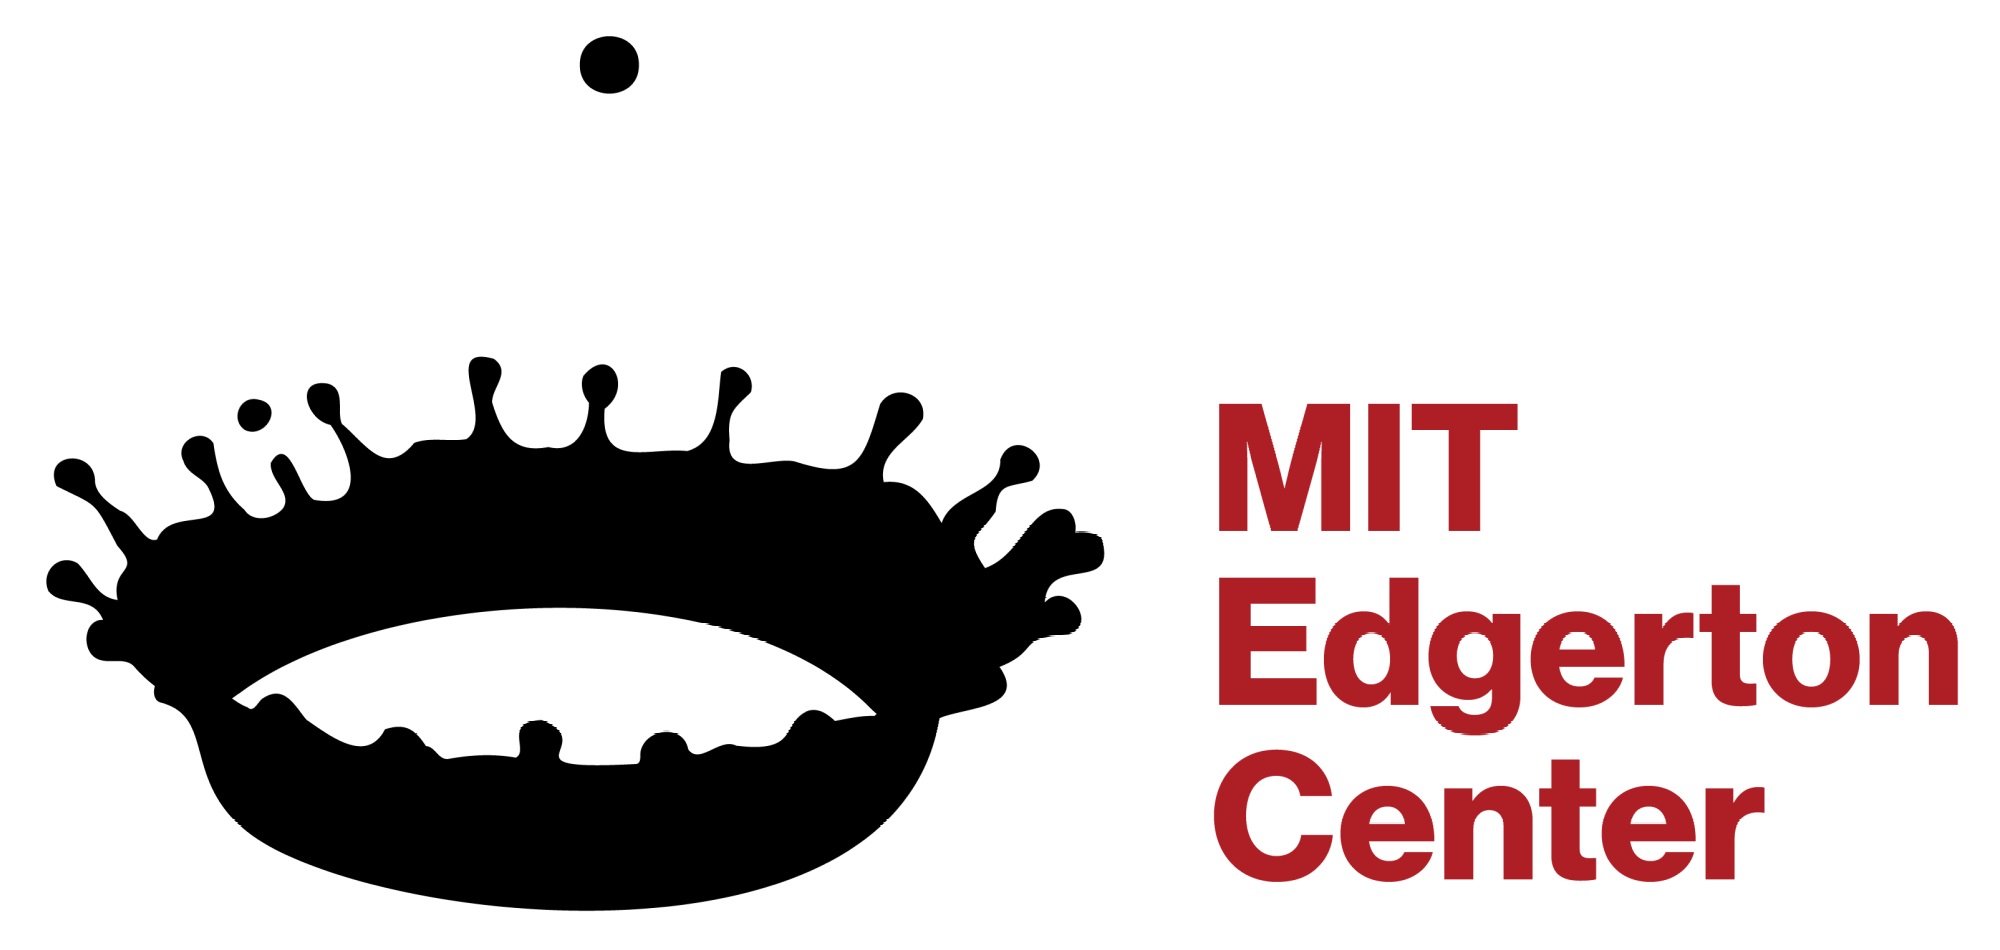 Edgerton Center at MIT